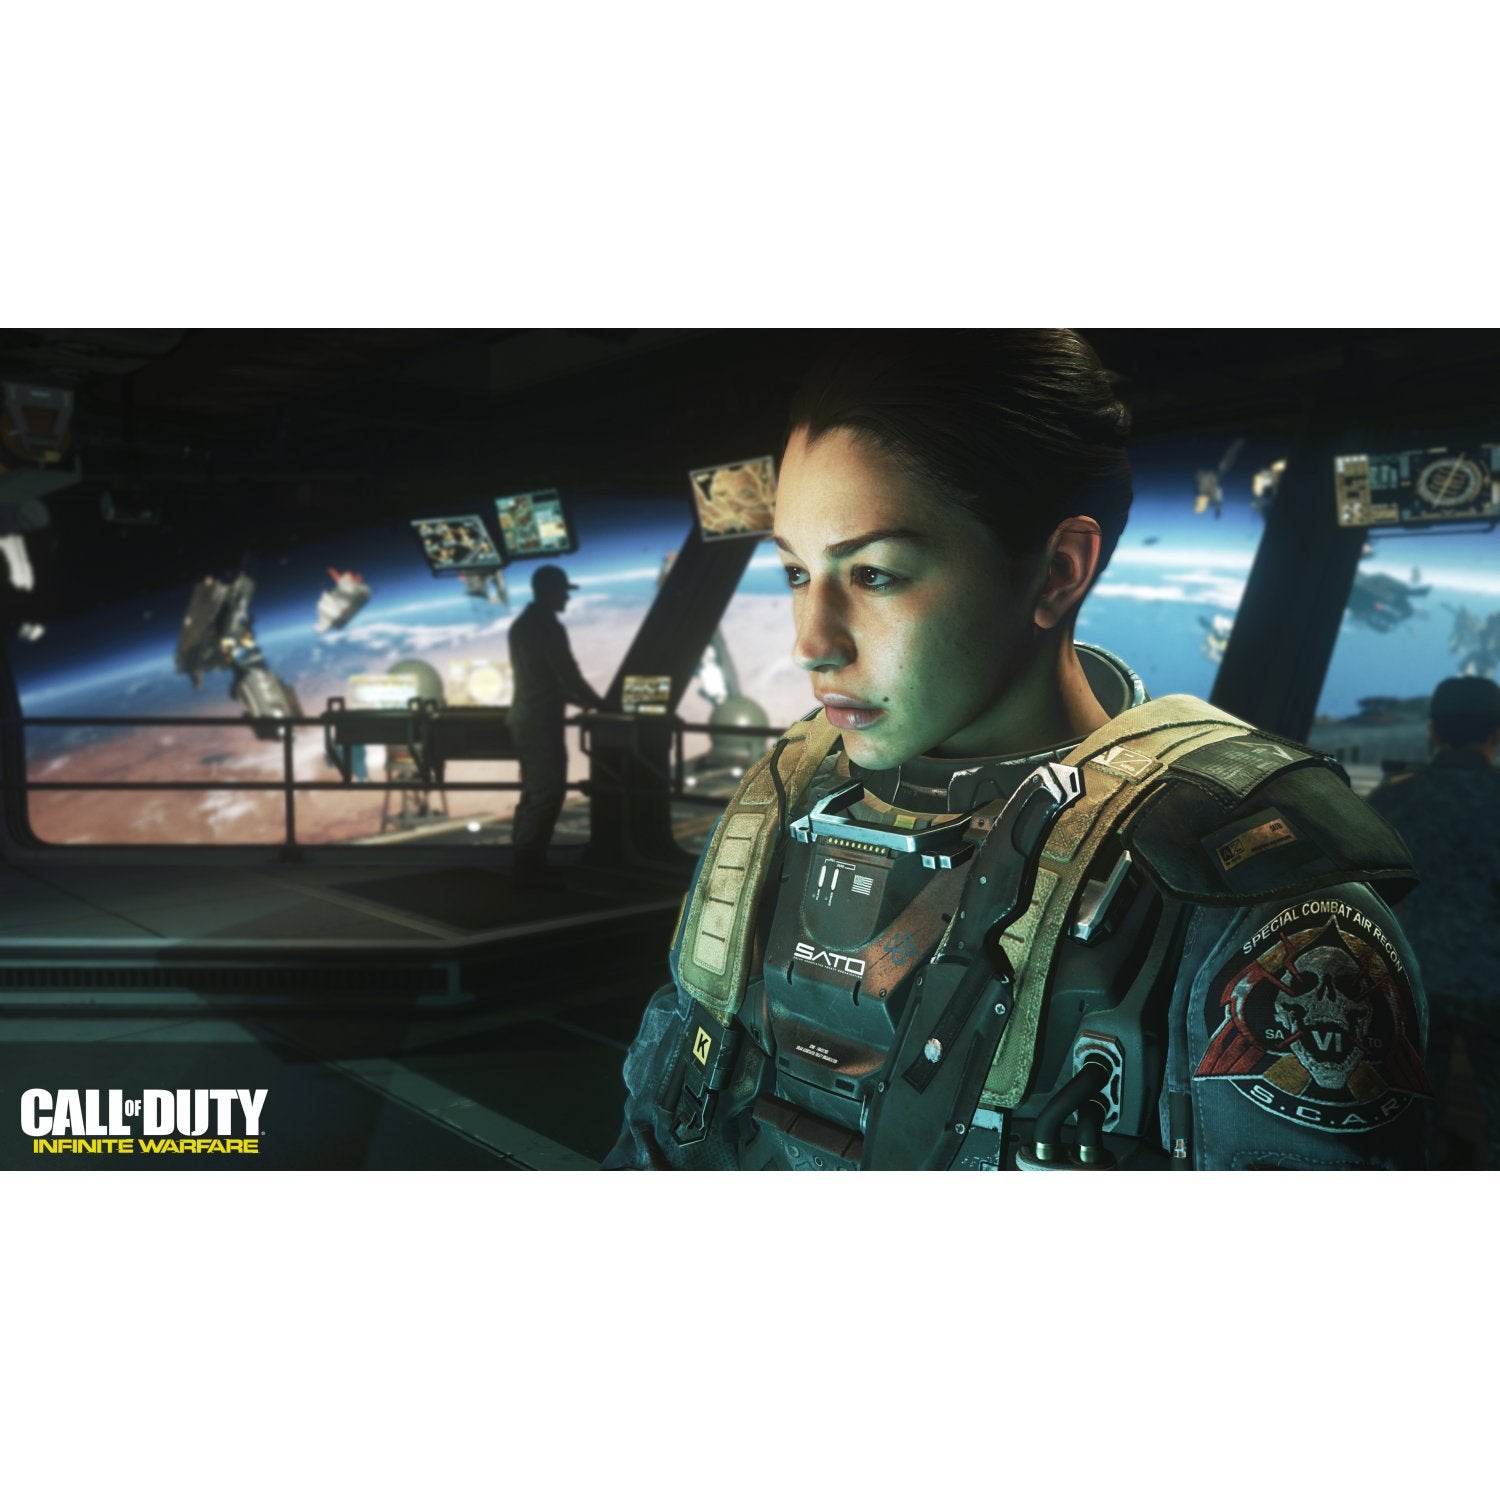 Call of Duty: Infinite Warfare - Xbox One Legacy Edition